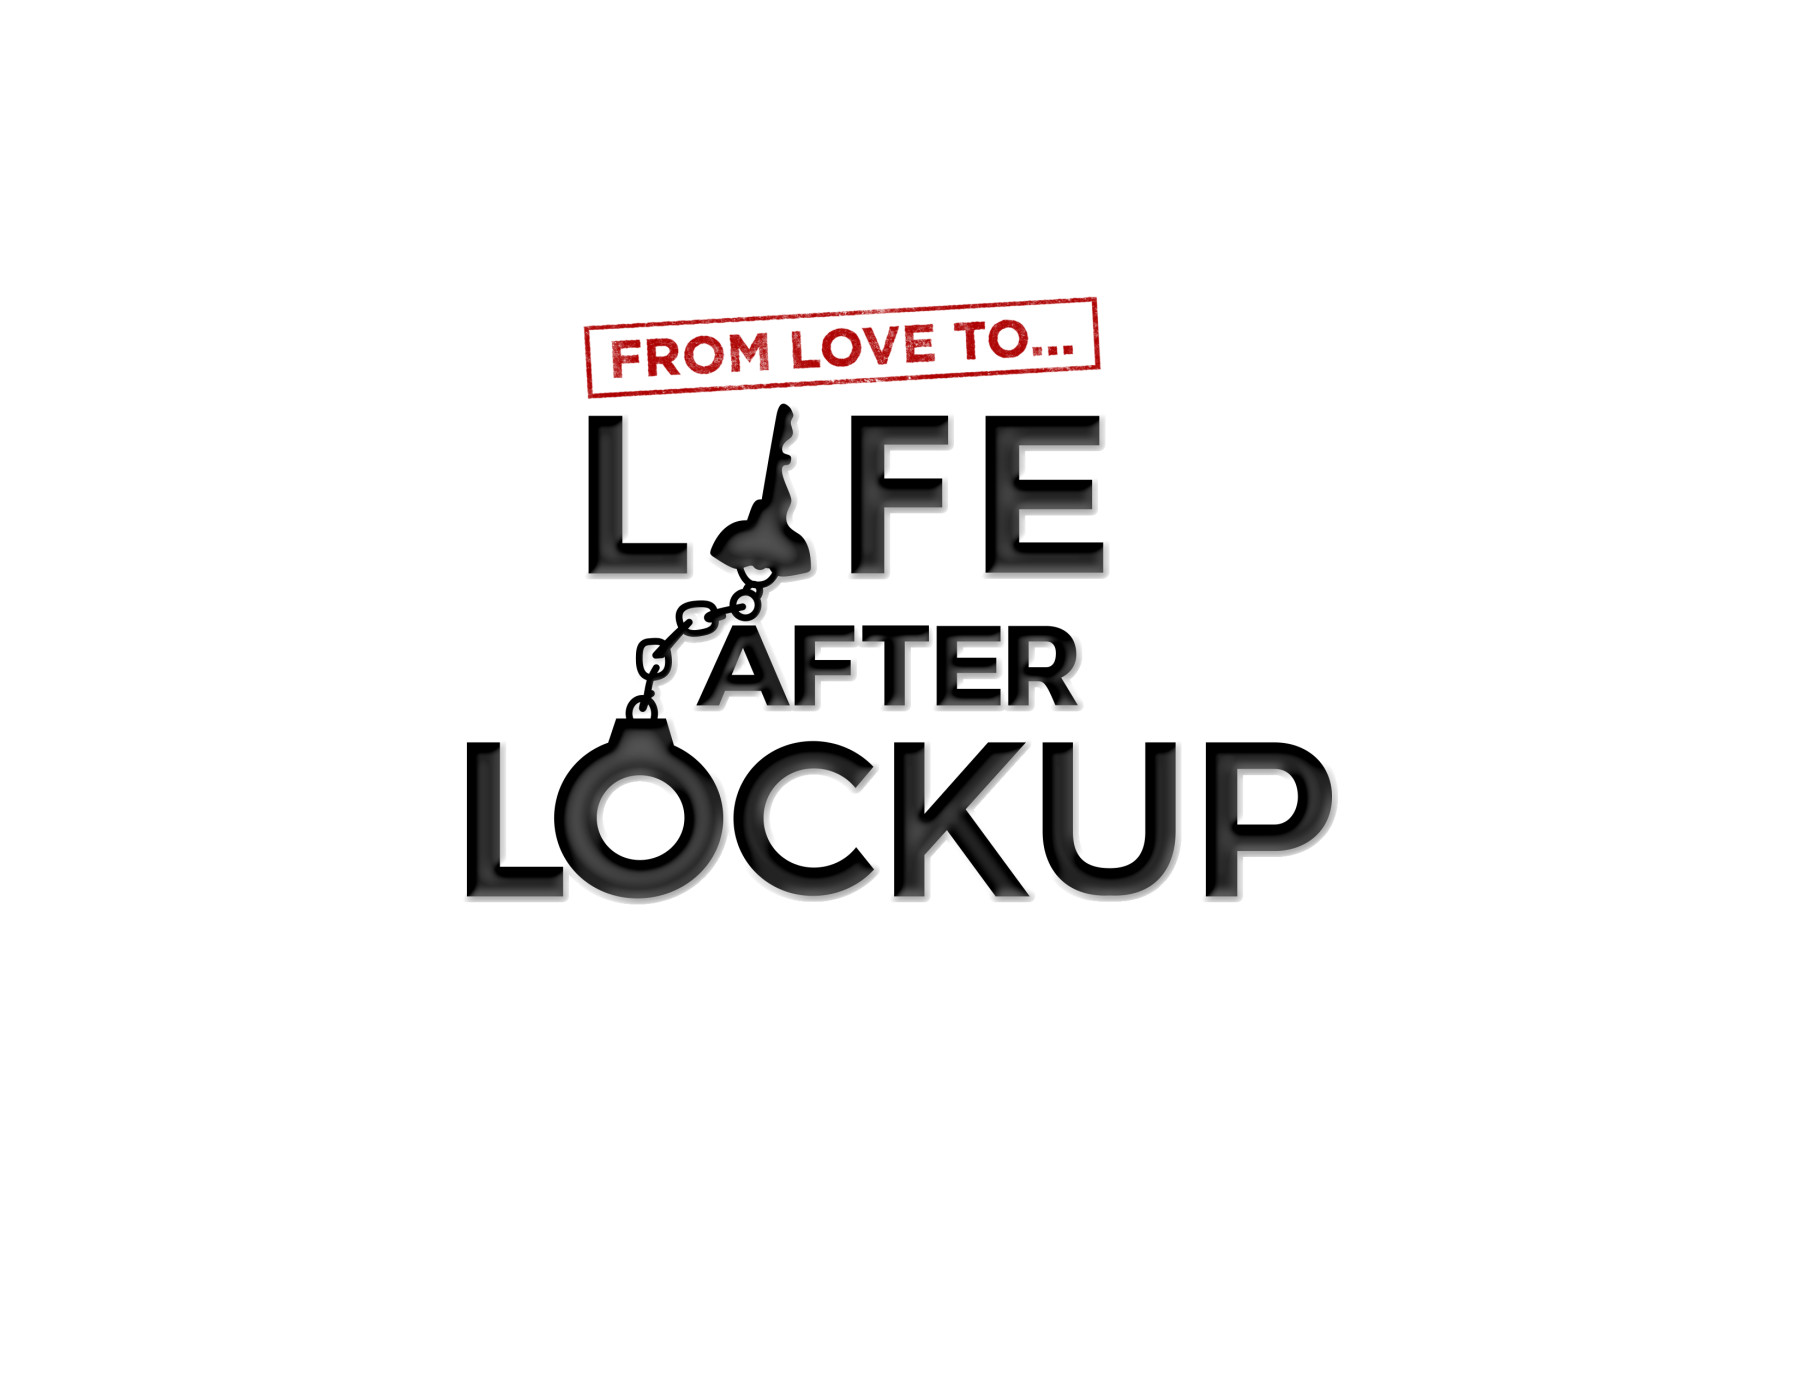 Life After Lockup